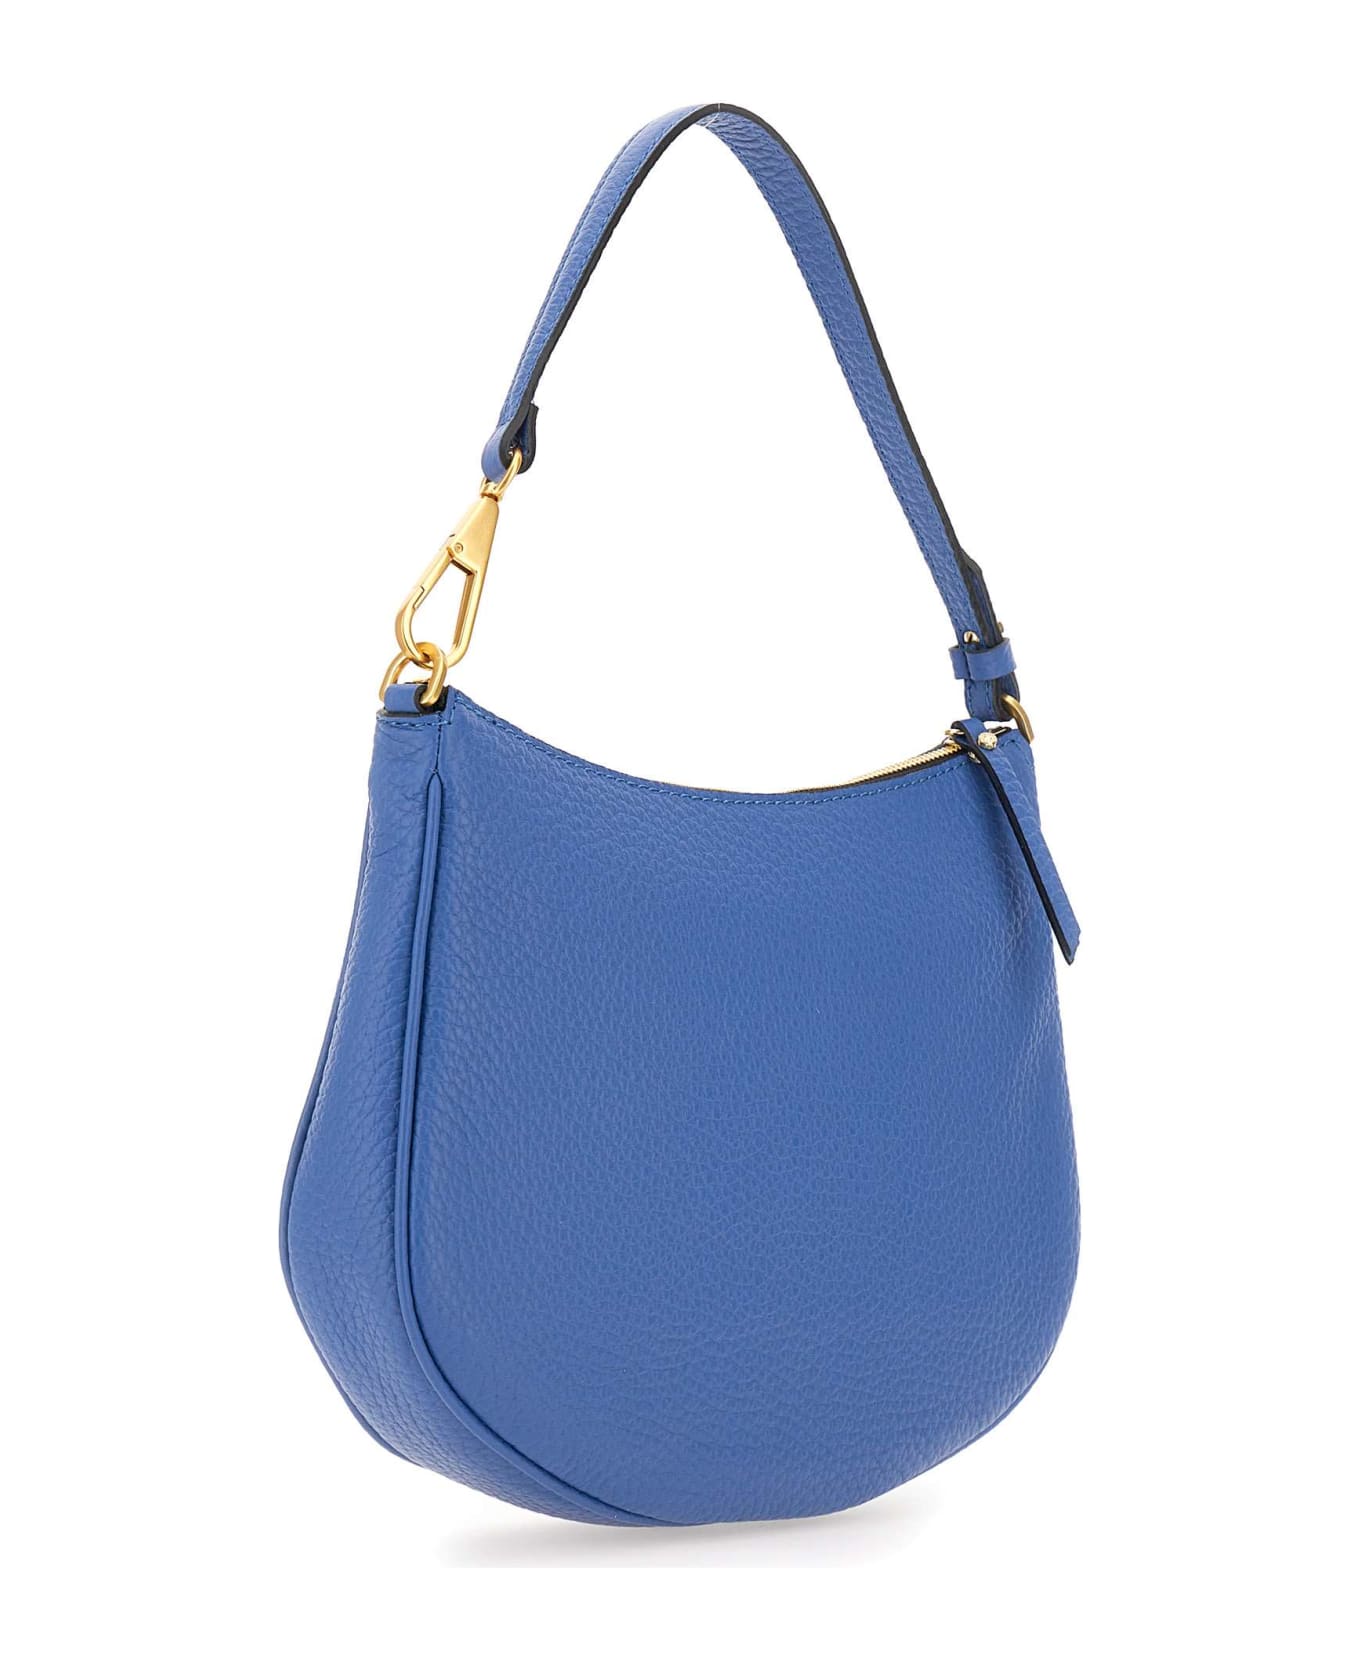 Gianni Chiarini "brooke" Leather Bag - BLUE